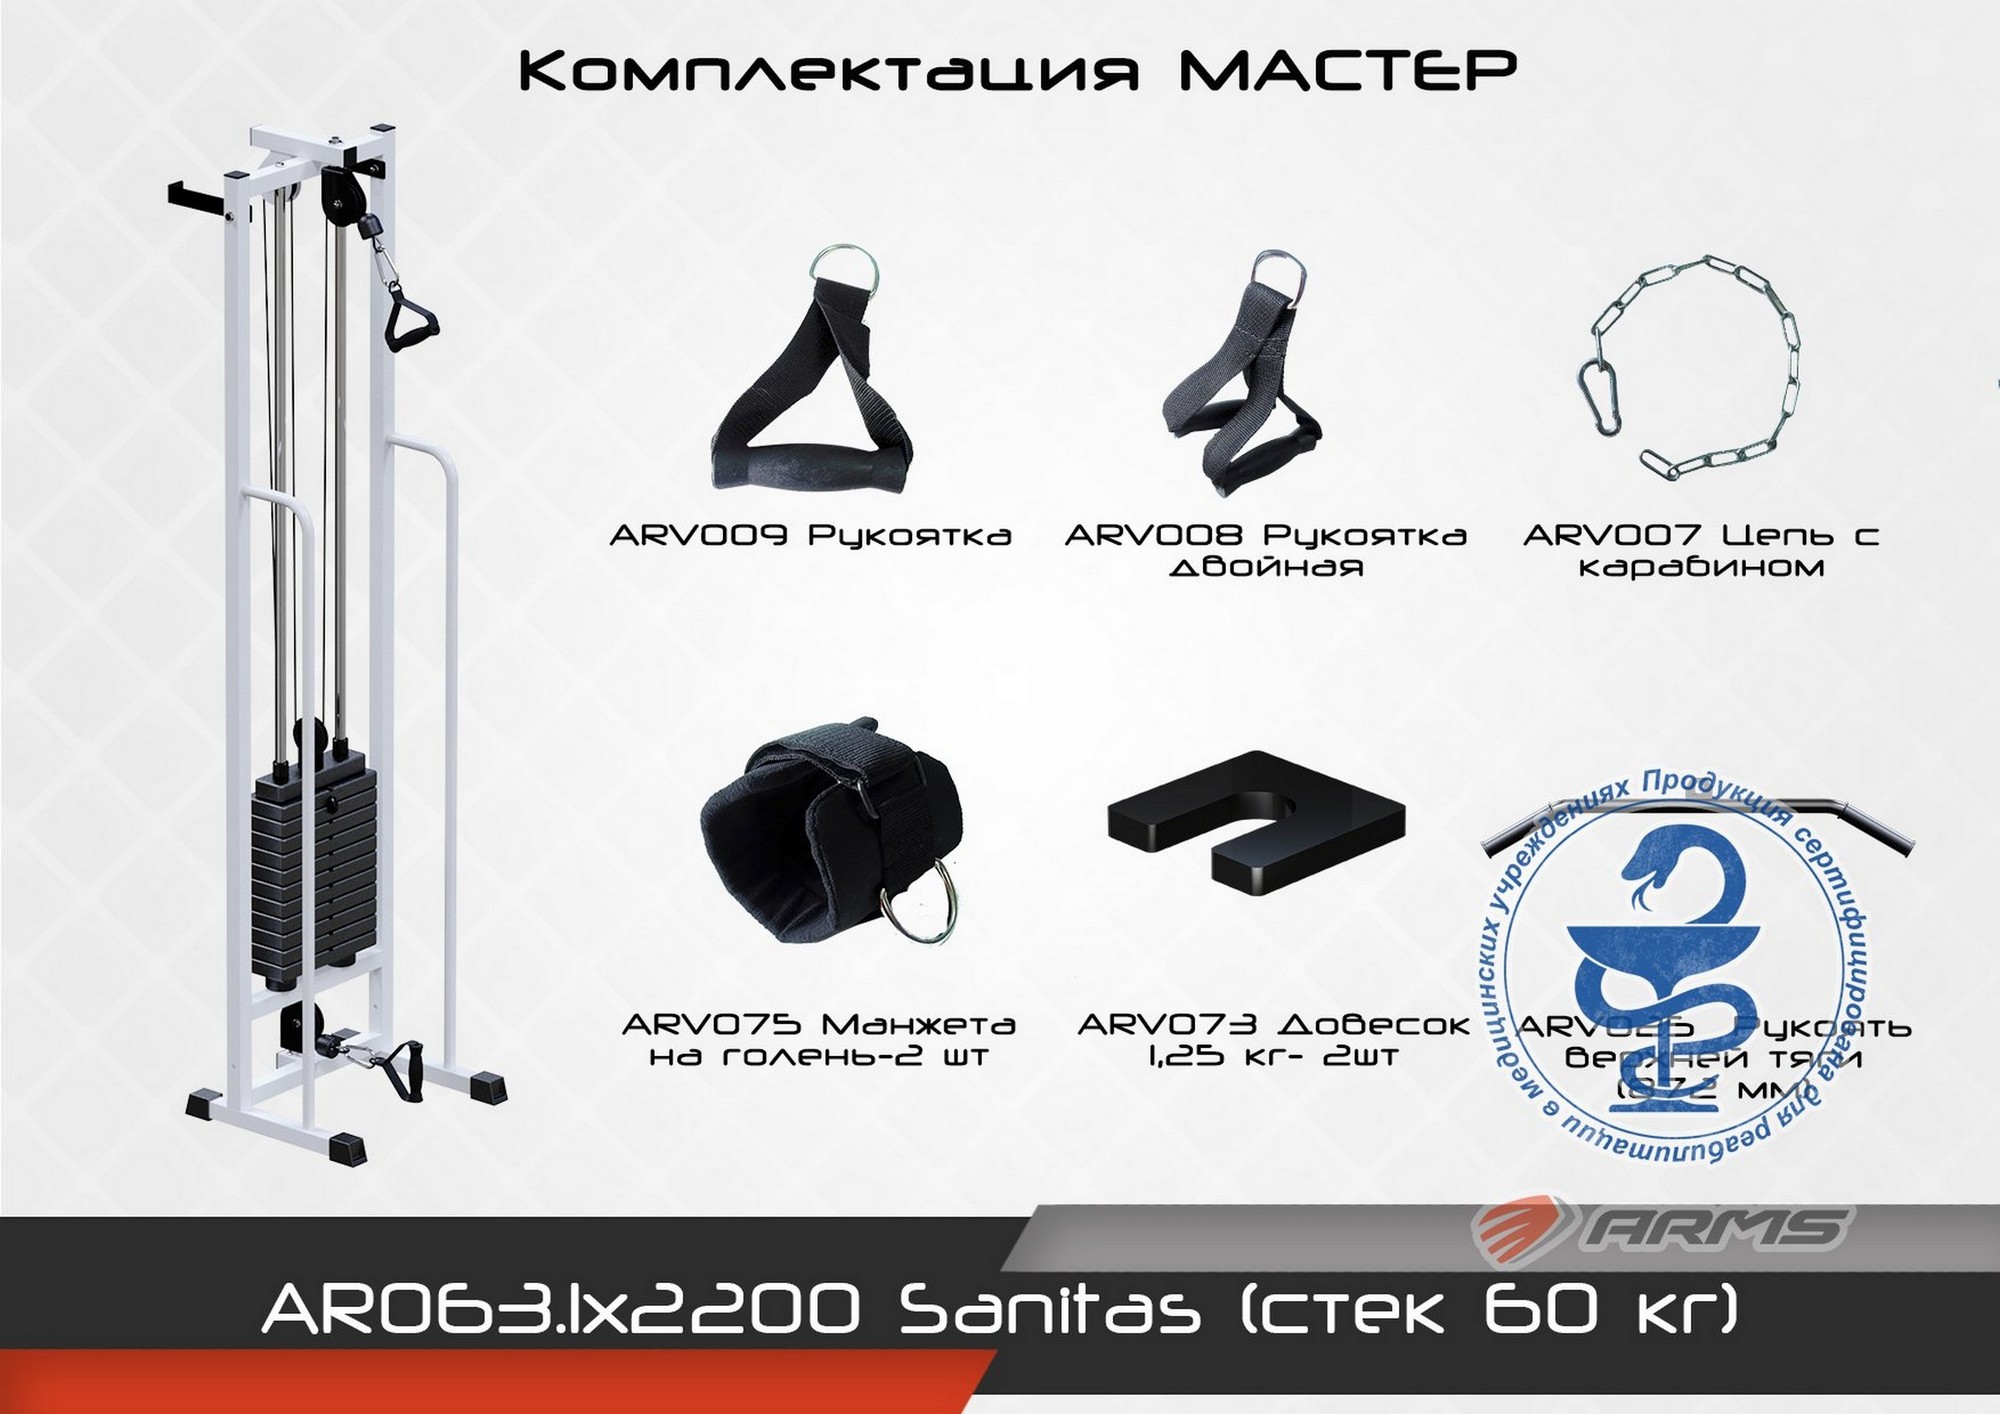 Тренажер ARMS Sanitas Норма (стек 60 кг) AR063.1х2200 2000_1414